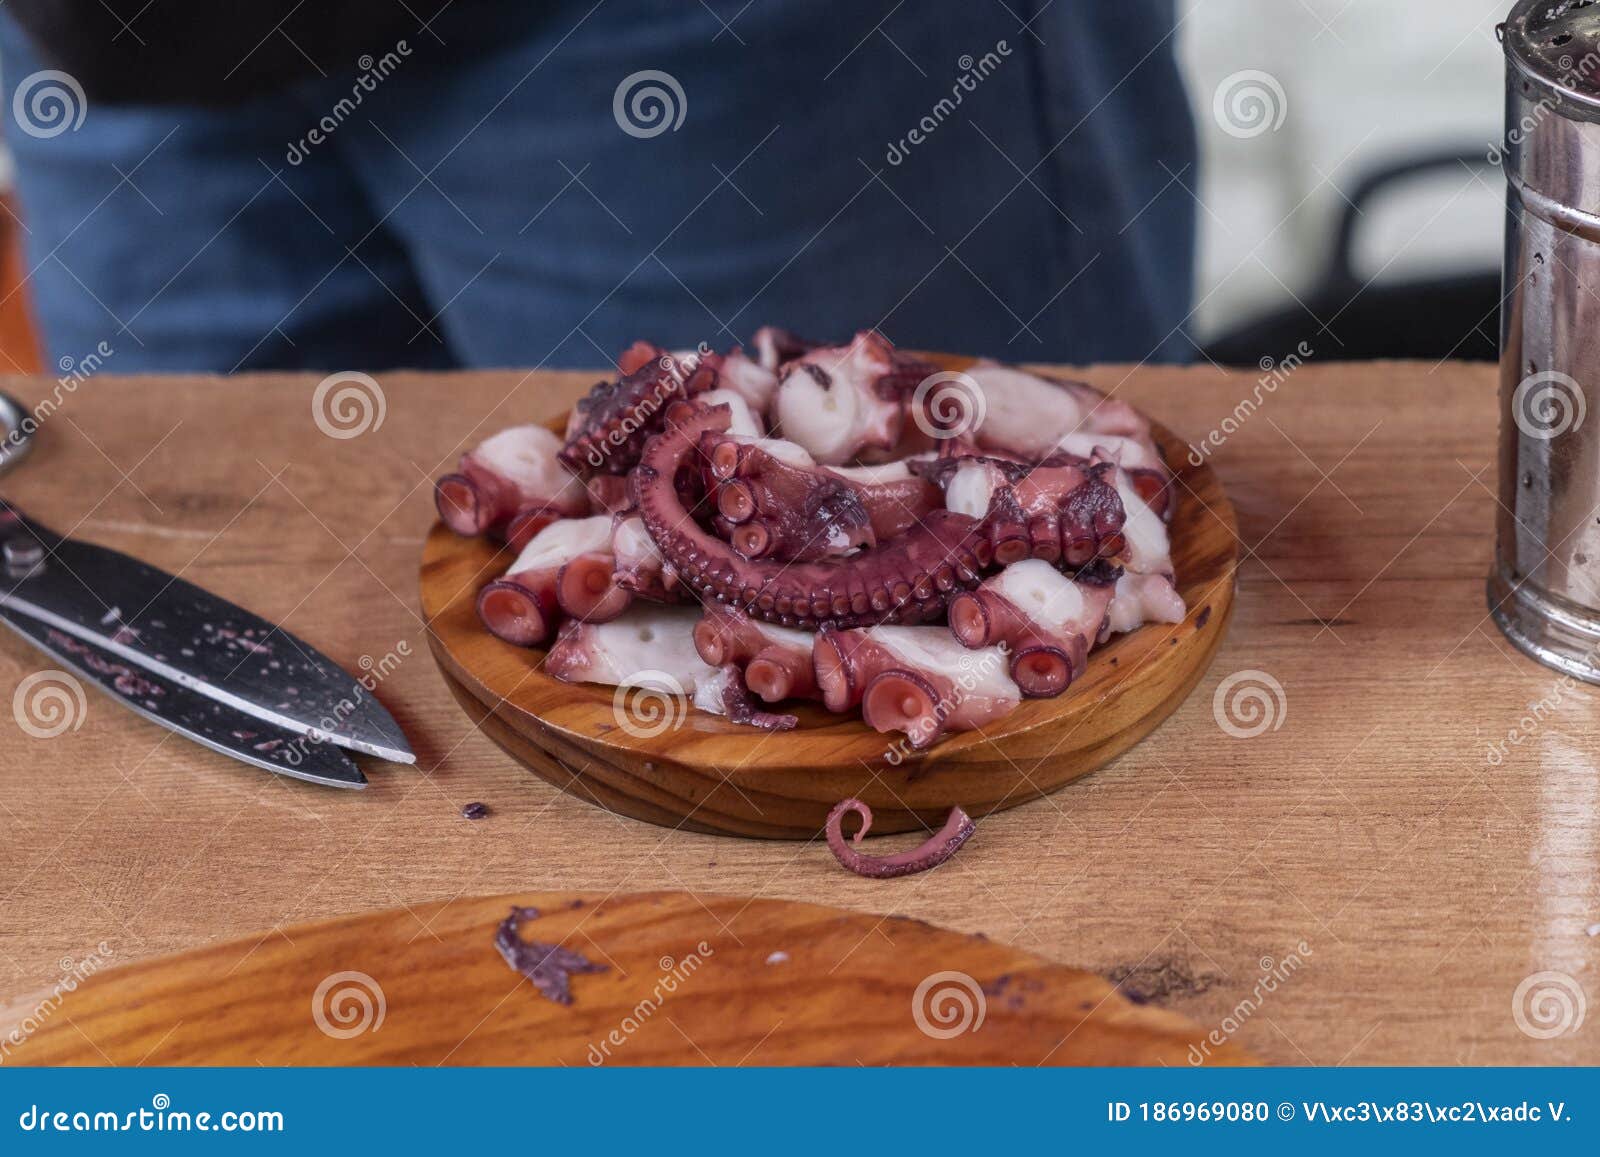 pulpo a la gallega octopus spanish traditional recipe